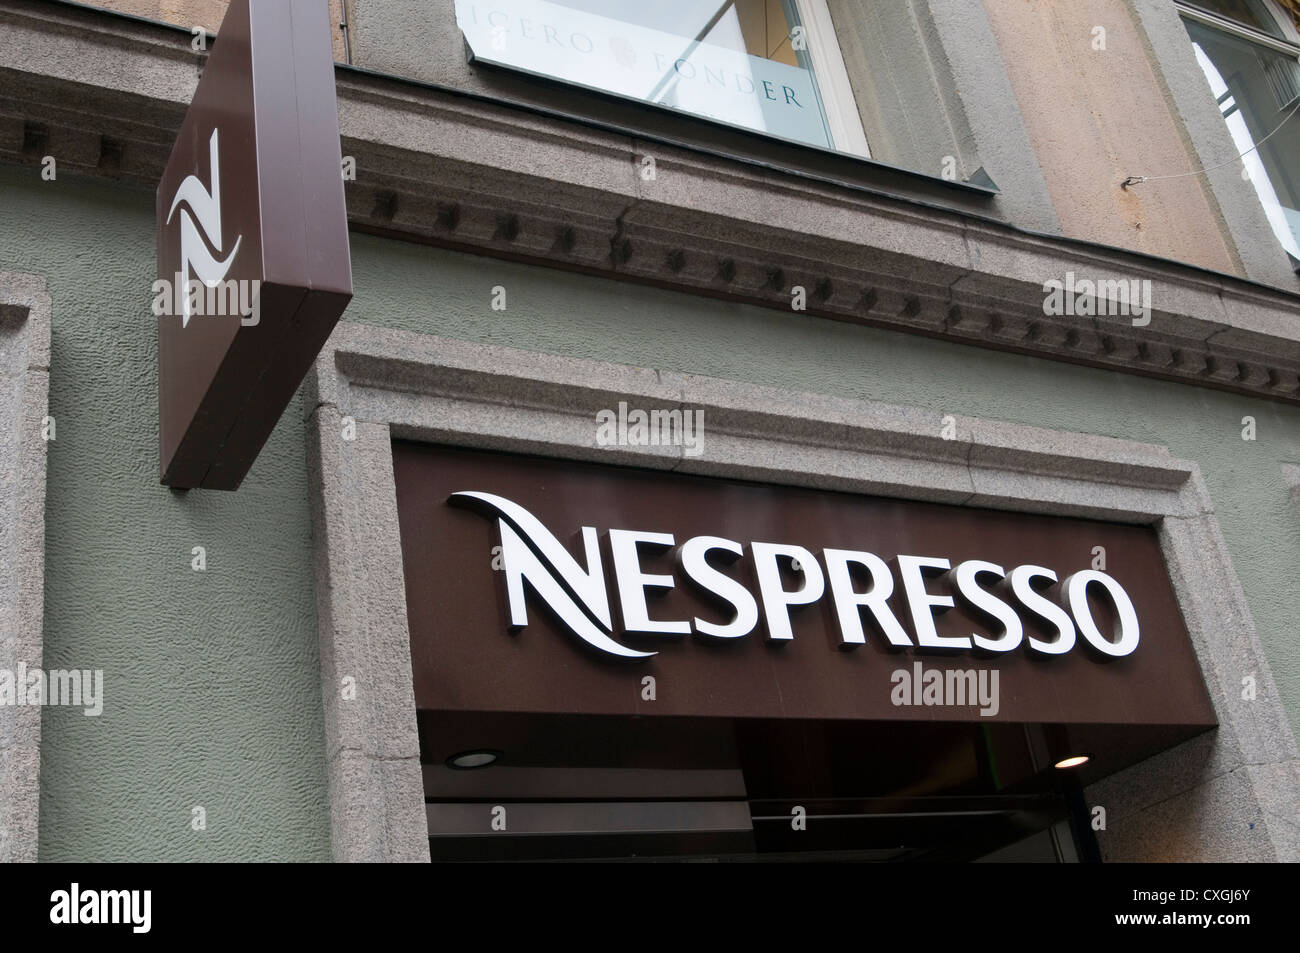 nespresso coffee cafe cafe's nestle brand Stock Photo